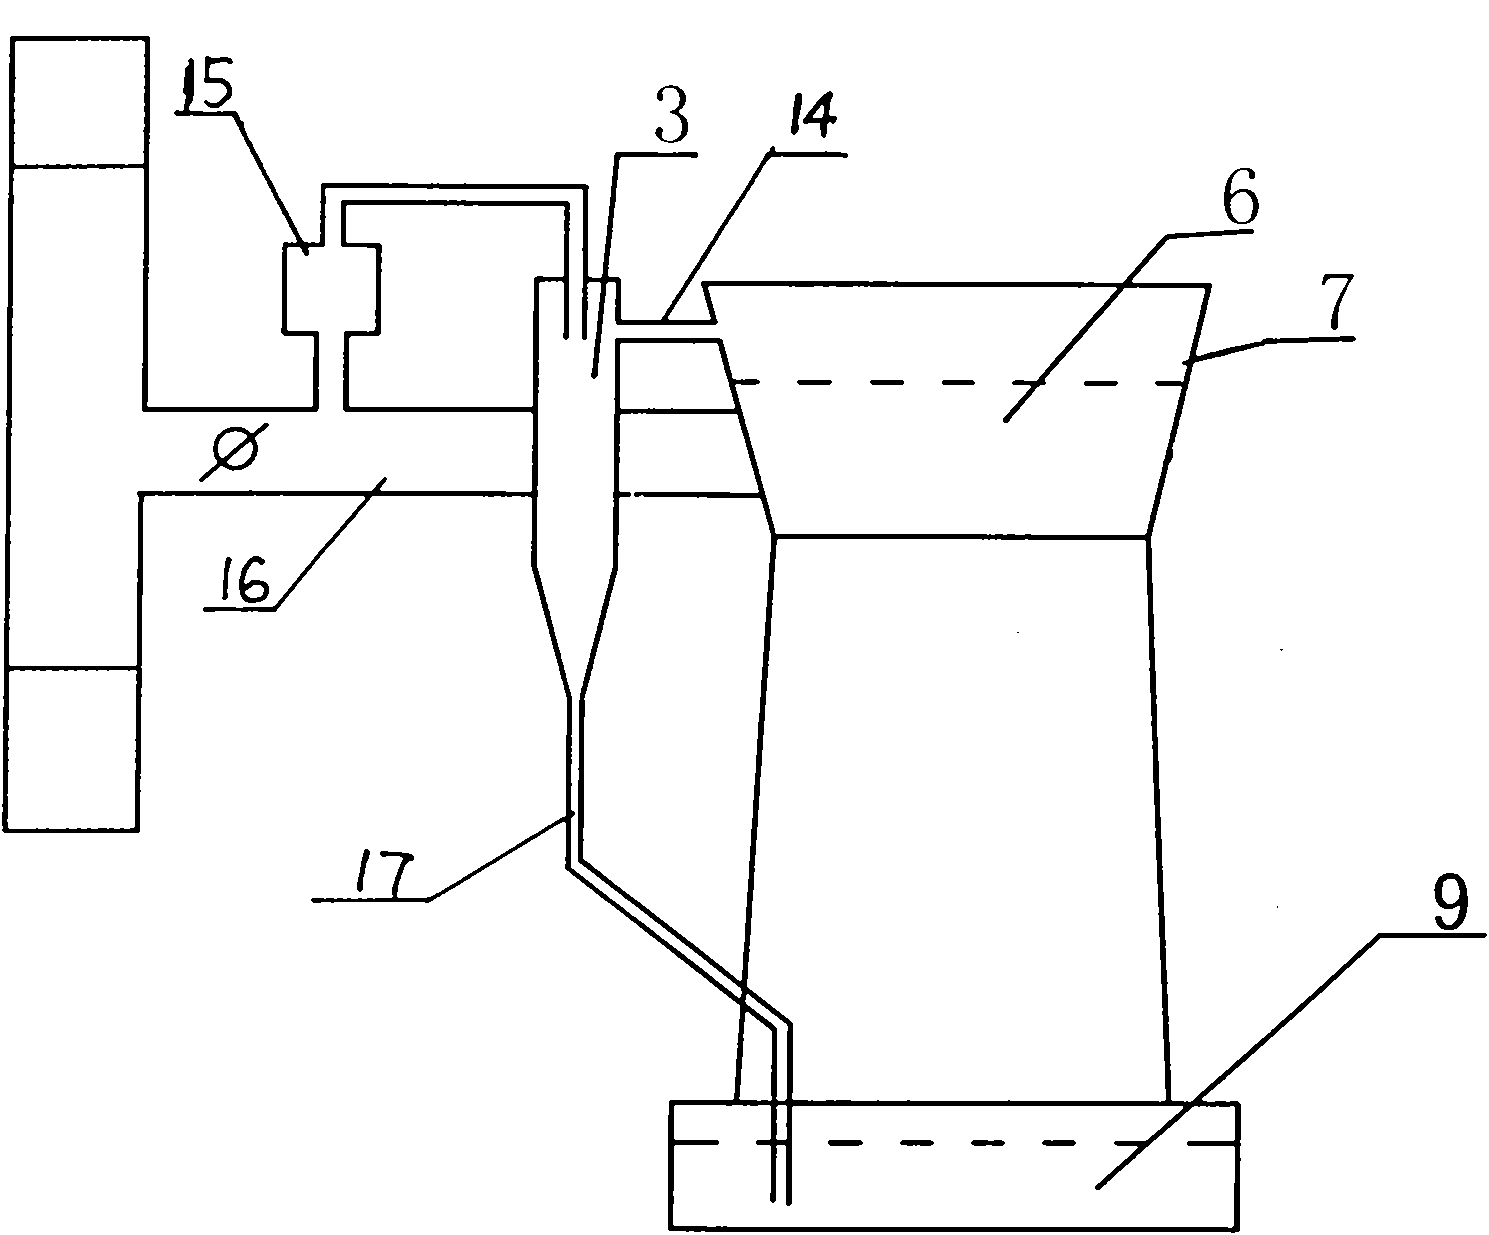 Engine air cylinder cap and crankshaft box ventilation circulation system